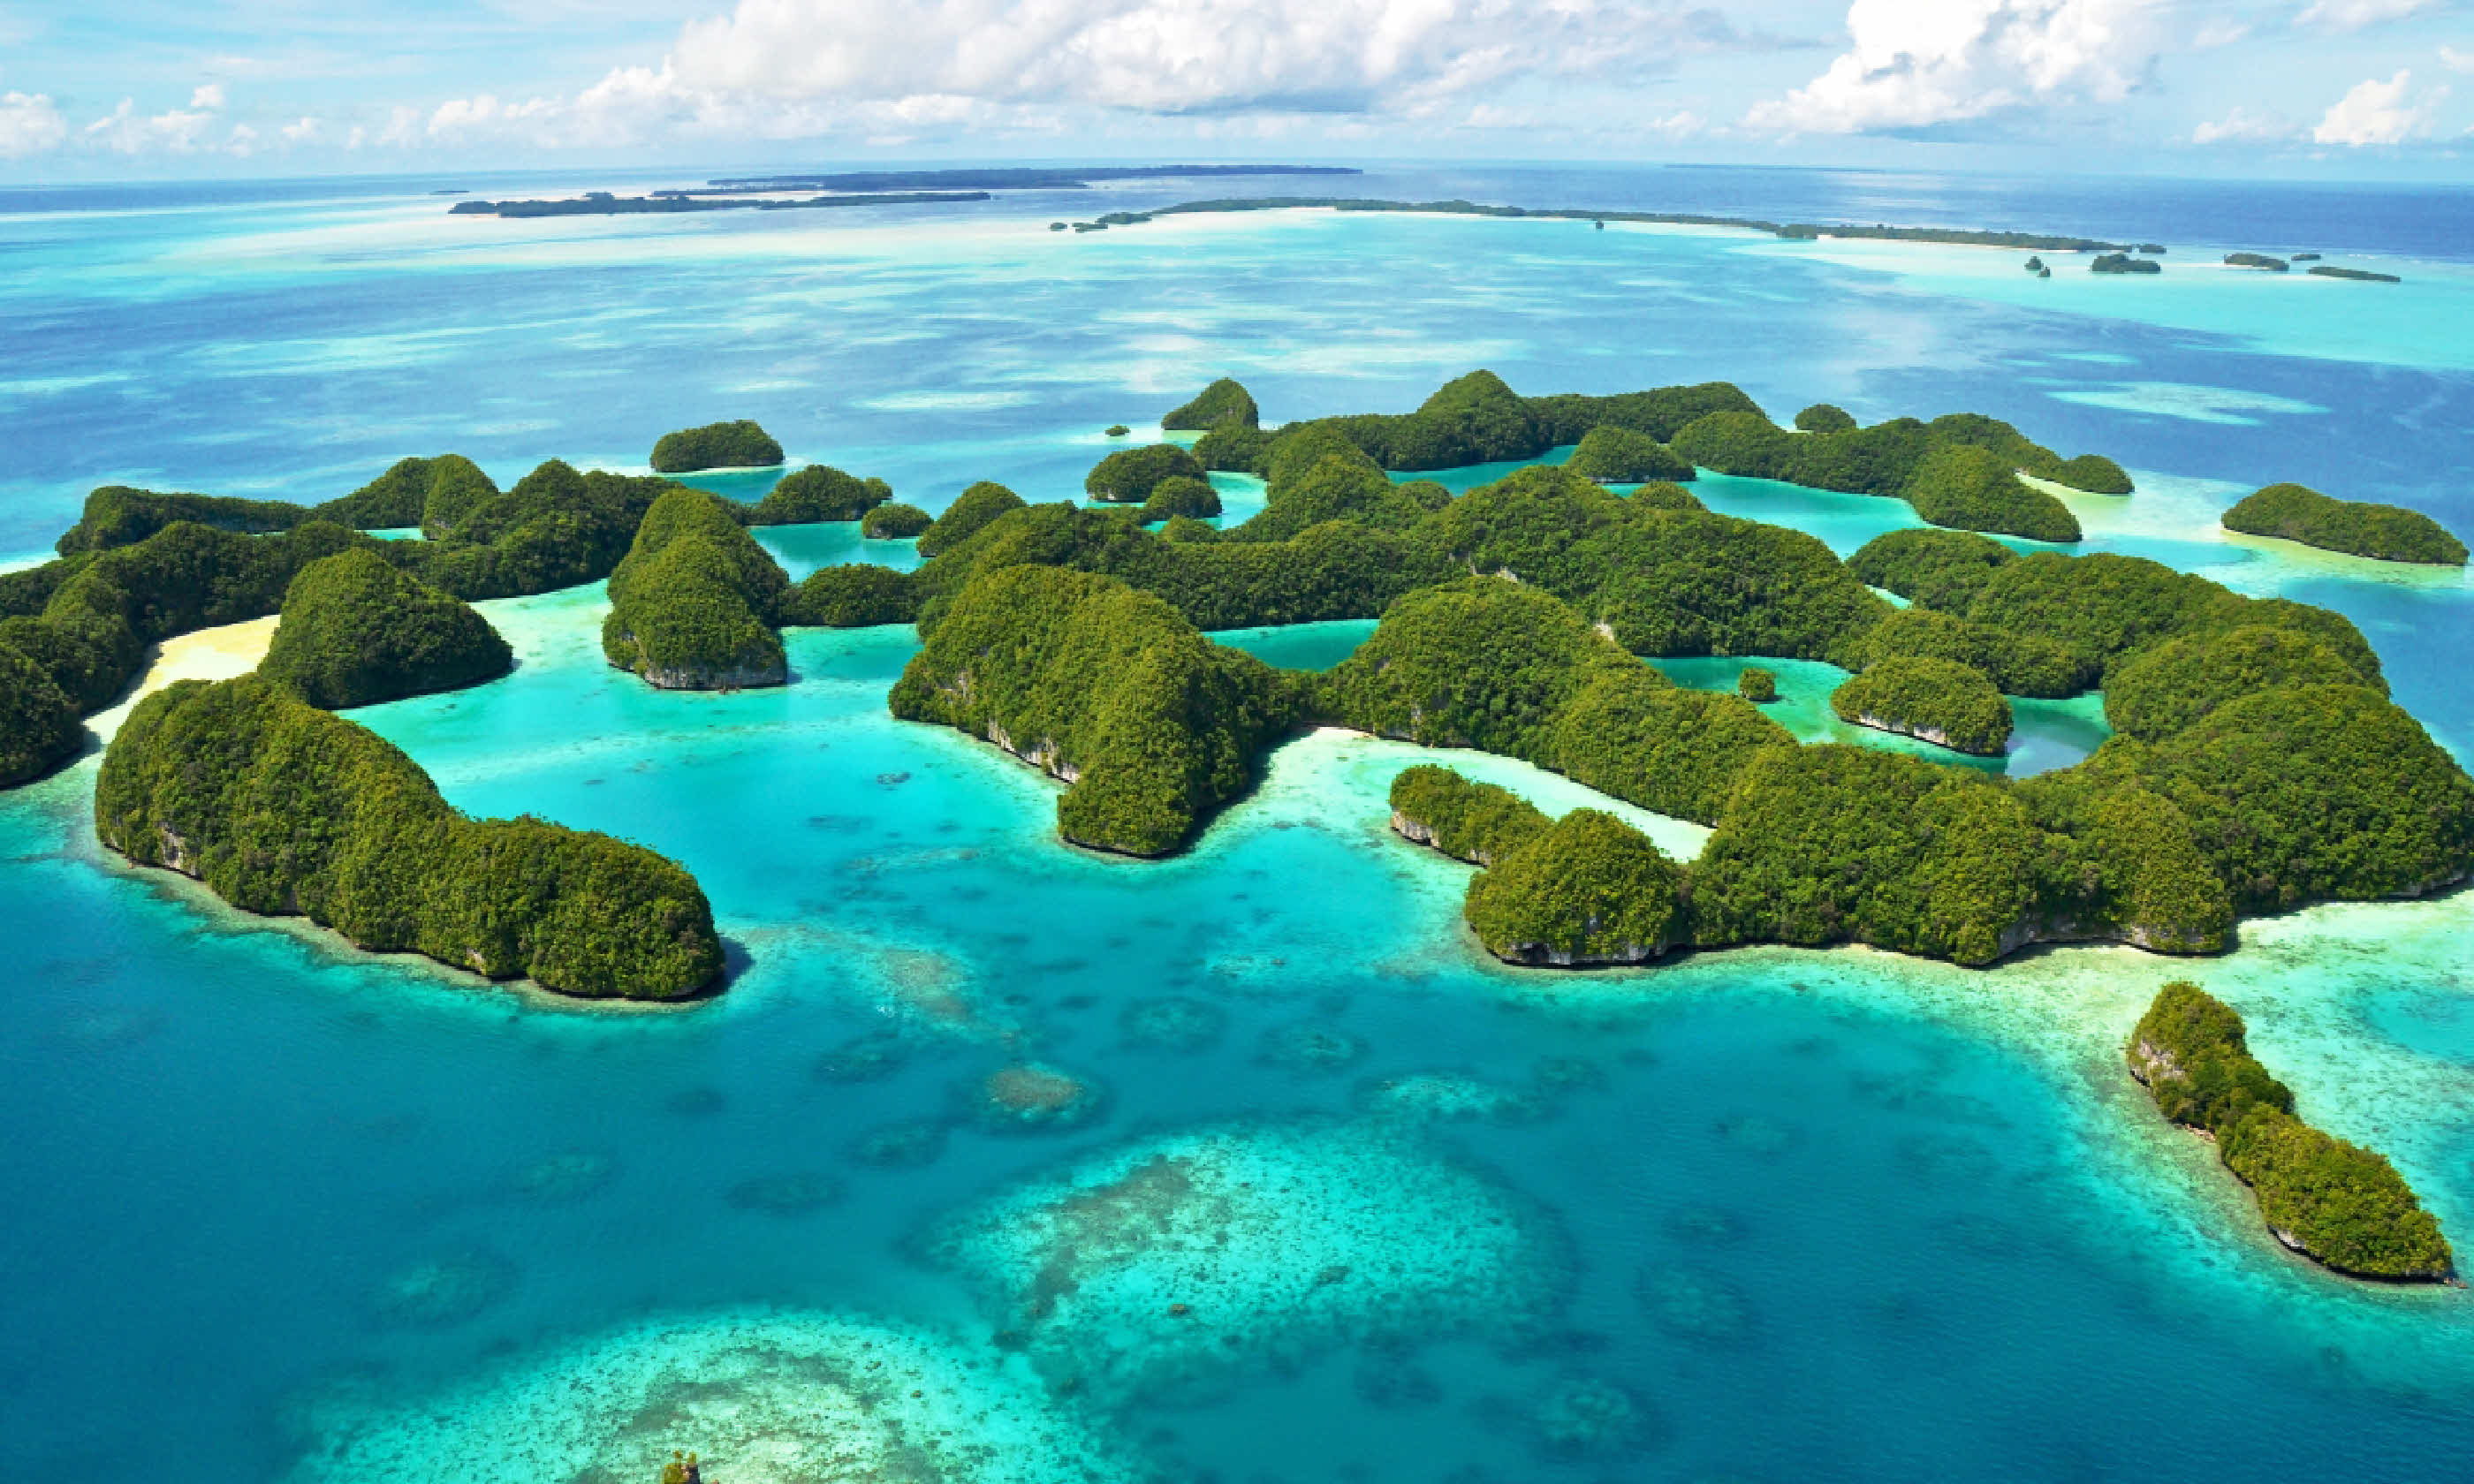 Main image: Islands of Palau (Shutterstock: see credit below)